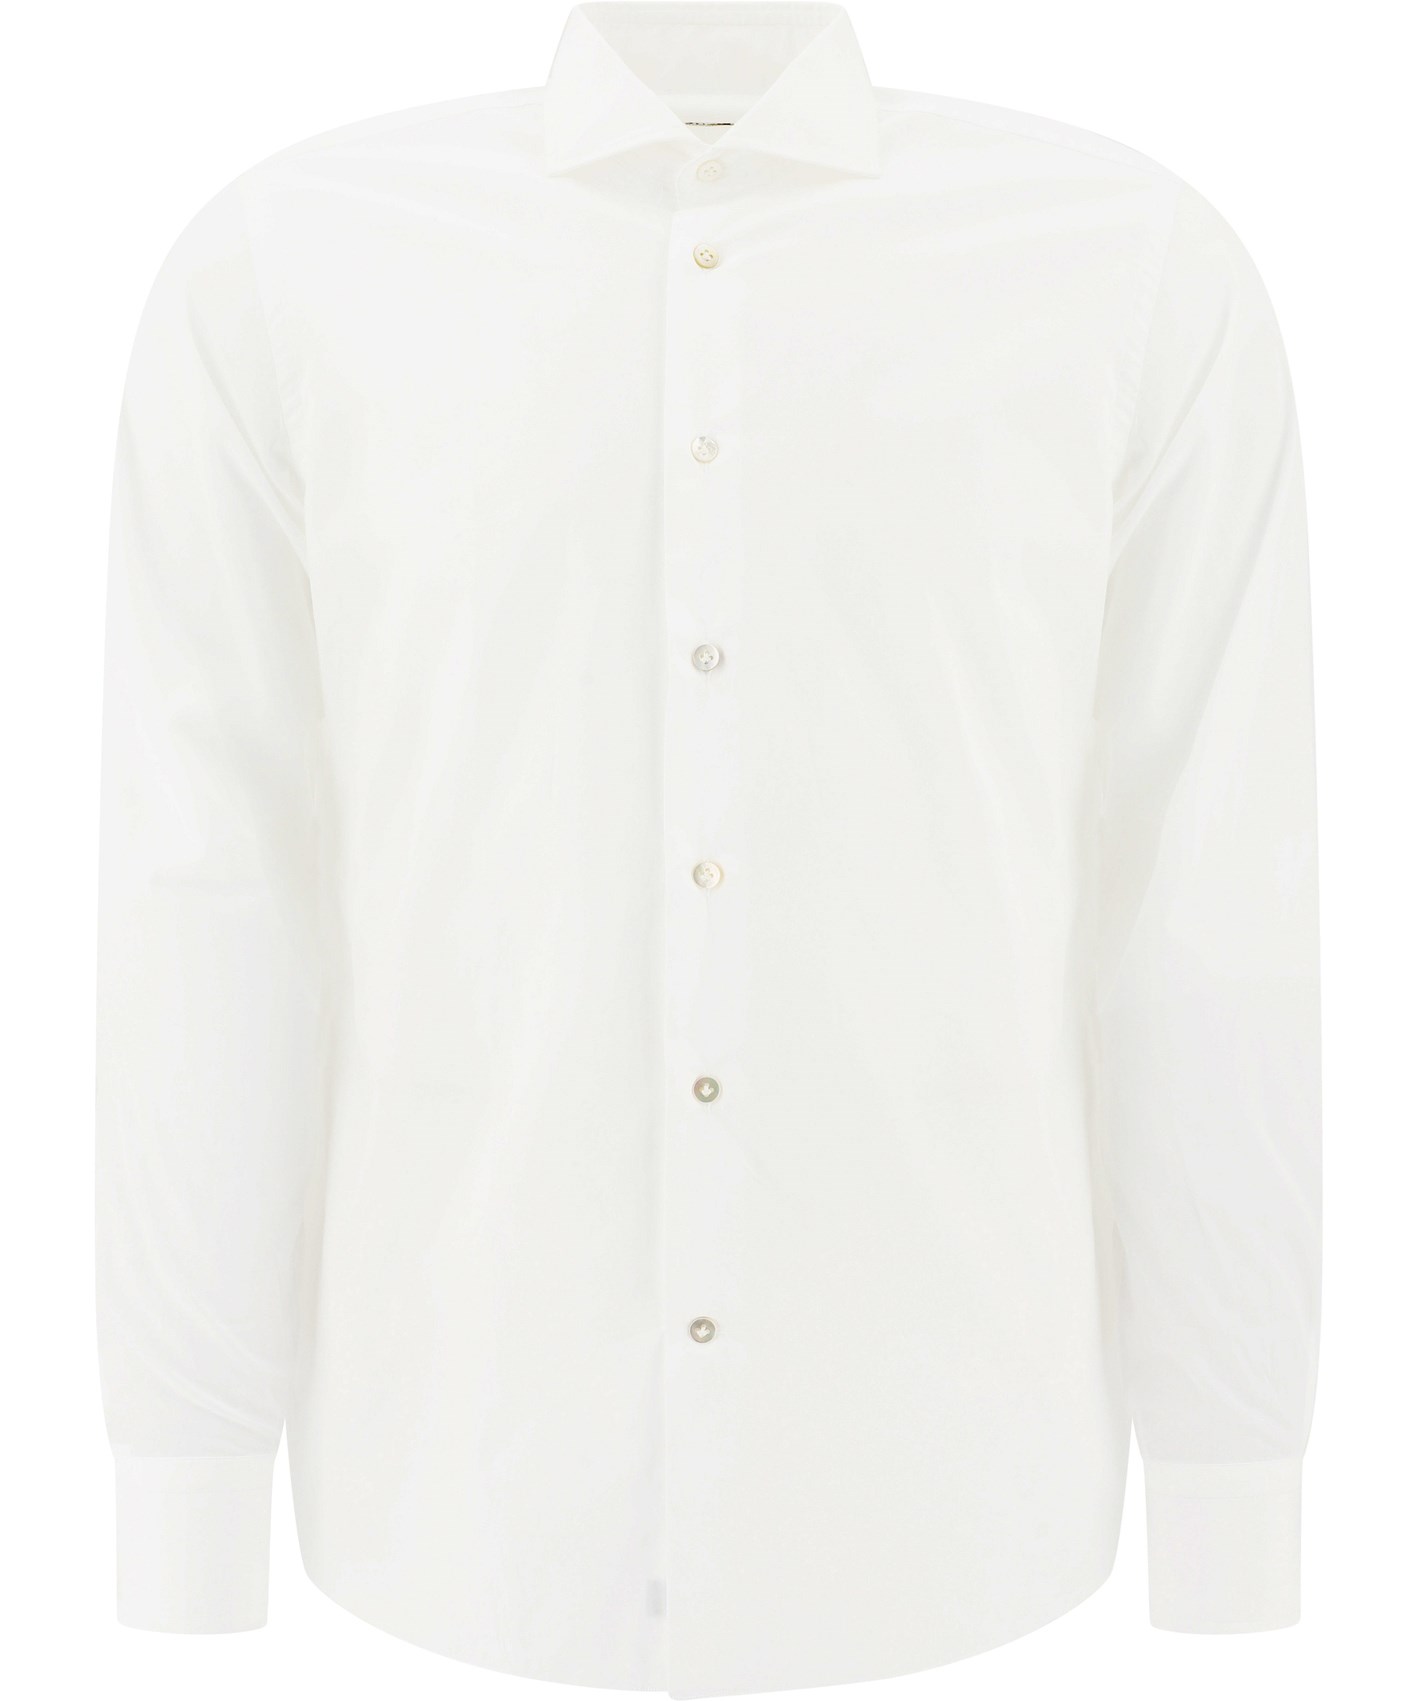 Borriello "idro" Shirt With Breast Pocket In White